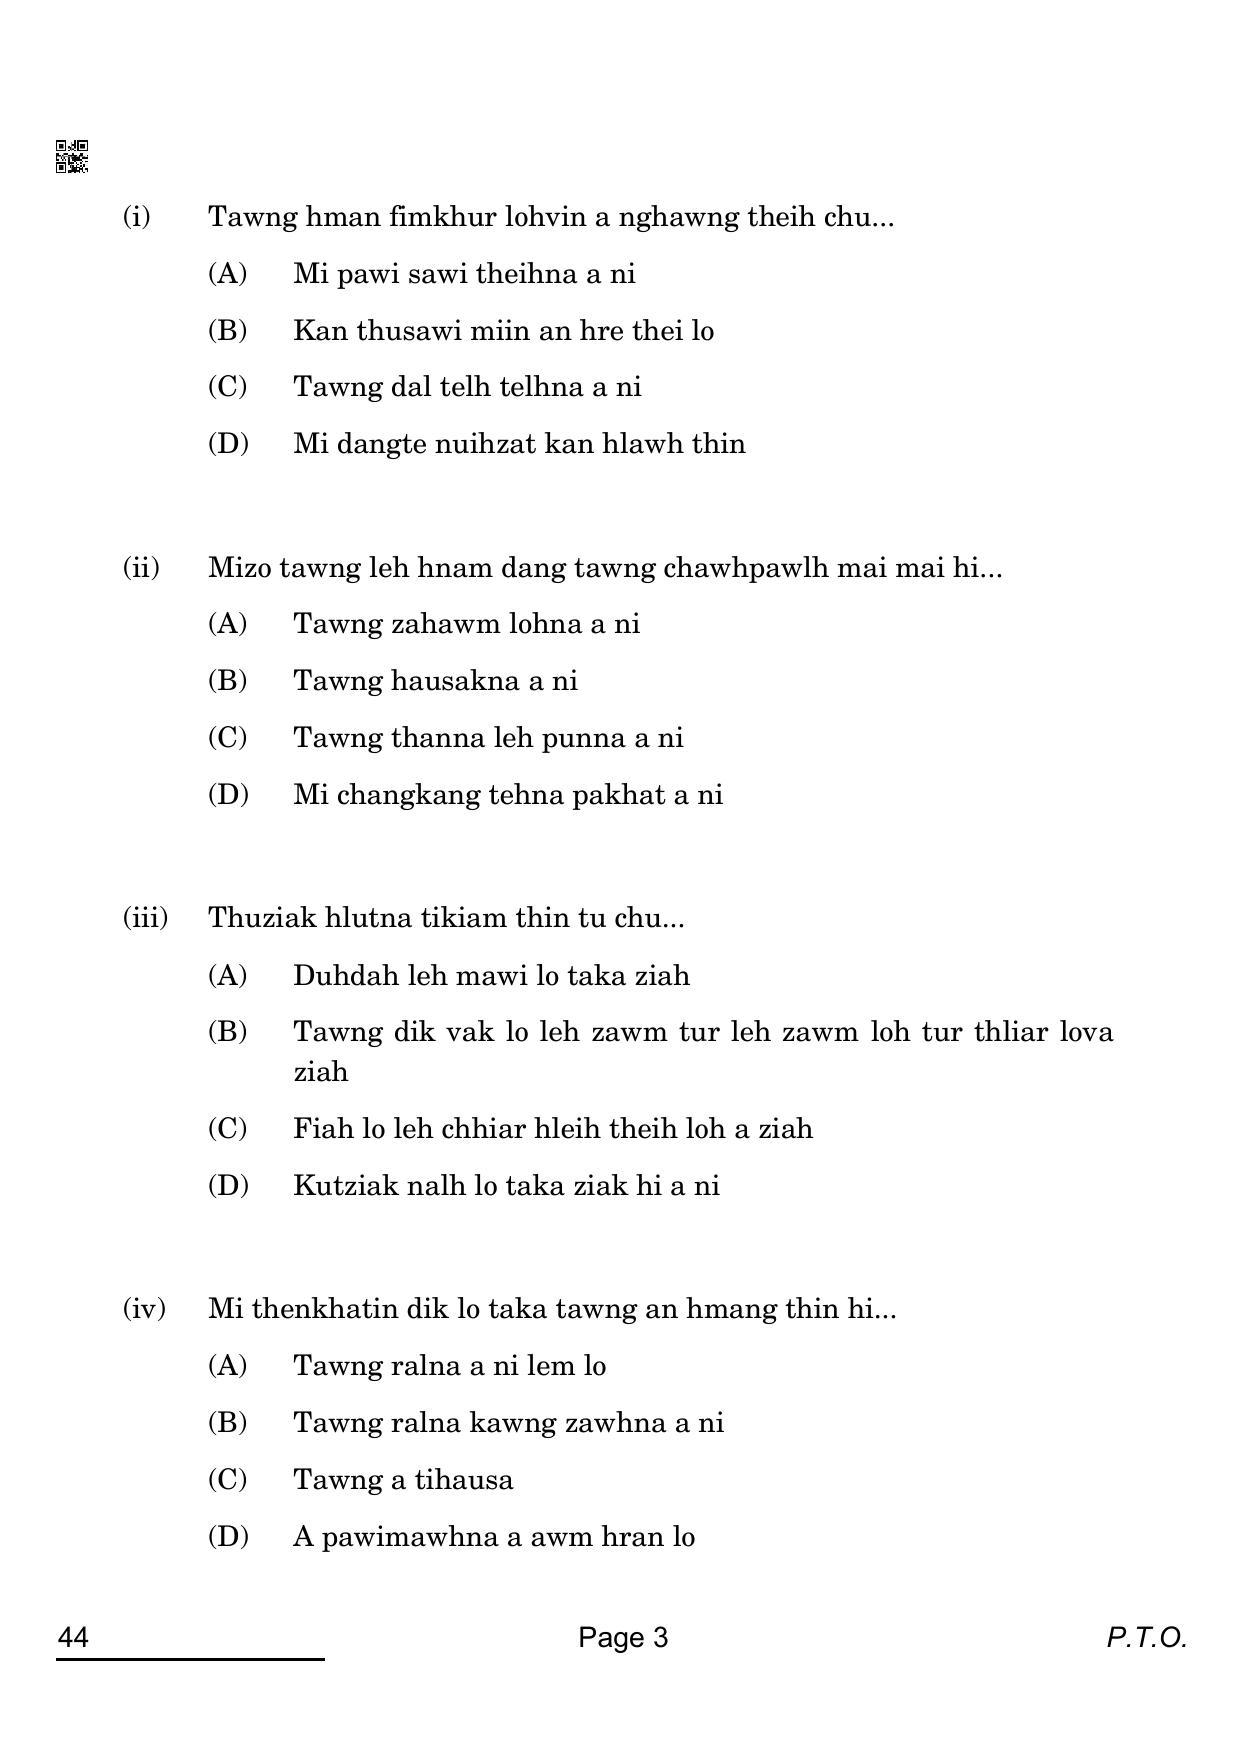 CBSE Class 10 44_ Mizo 2022 Question Paper - Page 3